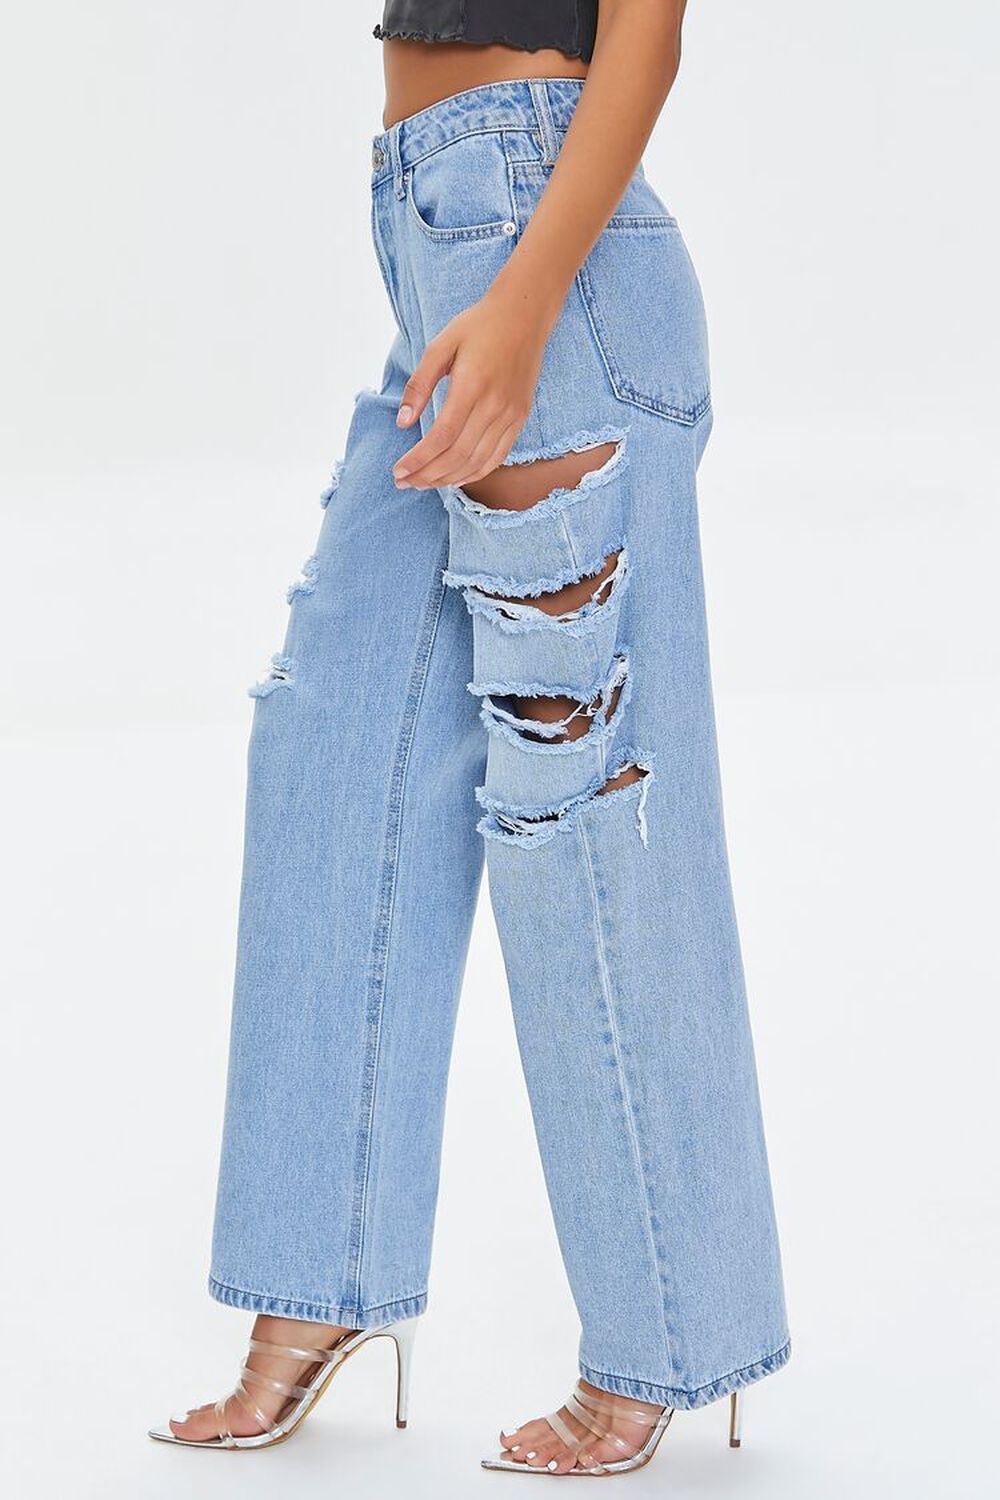 Premium Distressed 90s Fit Jeans, image 3